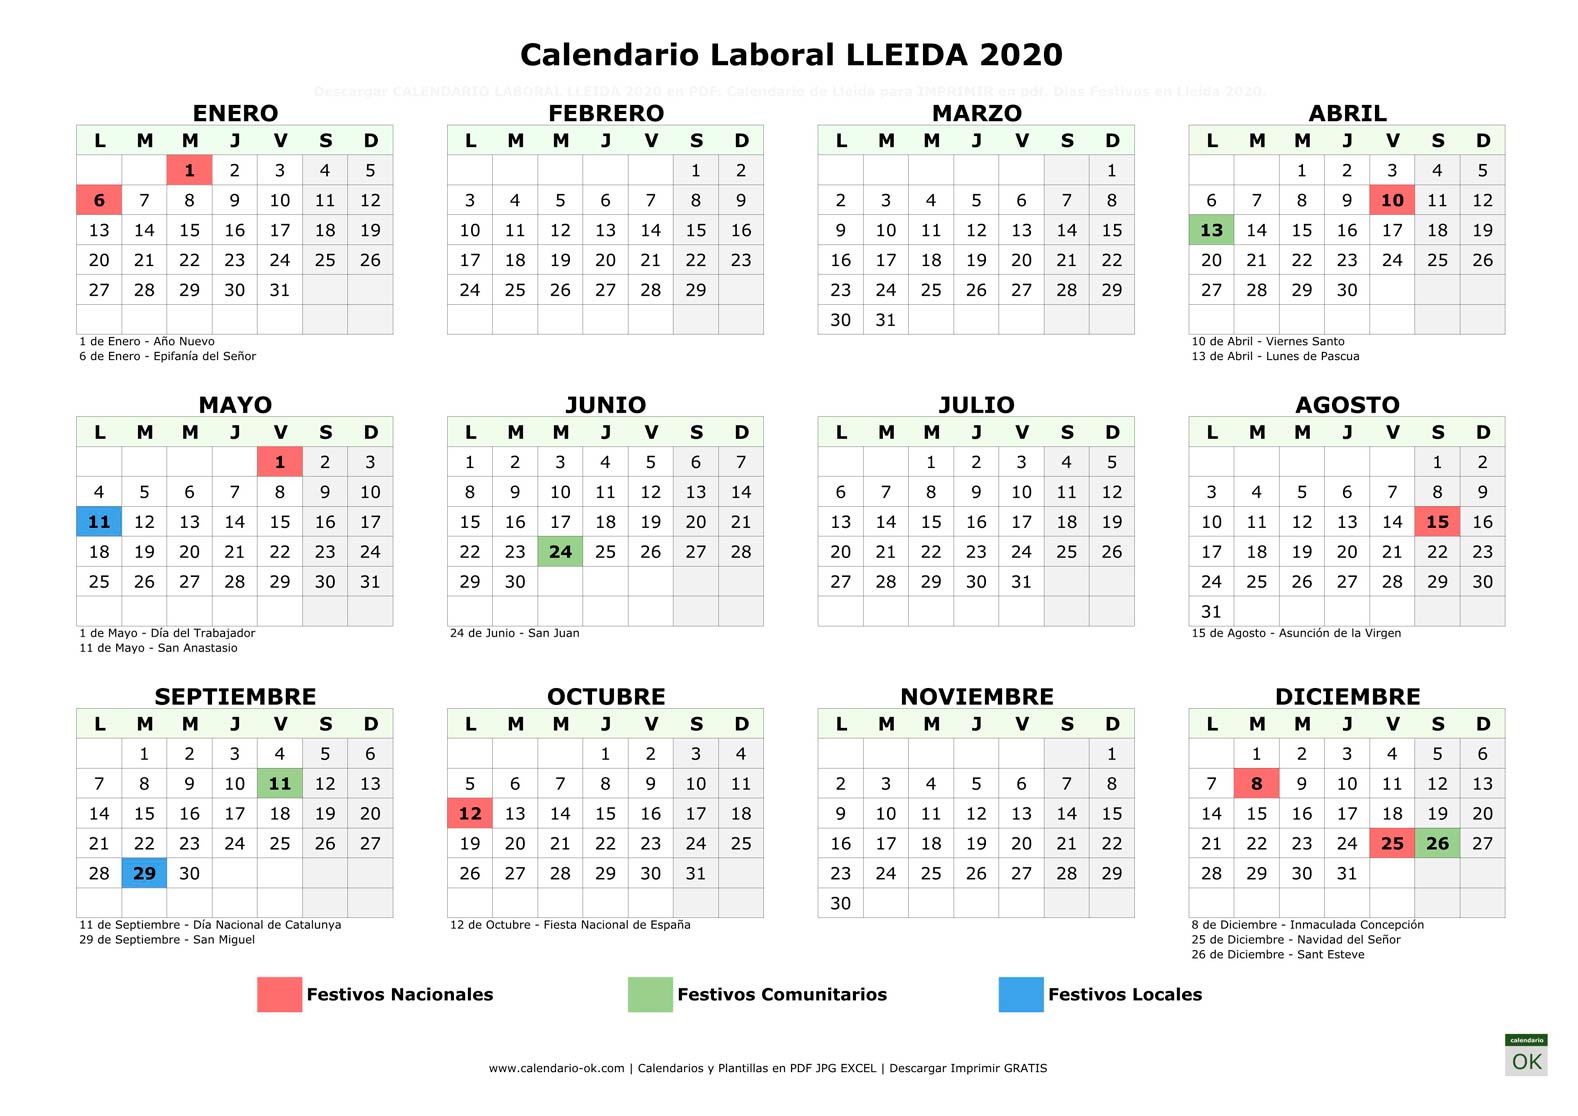 Calendario Laboral LLEIDA 2020 horizontal